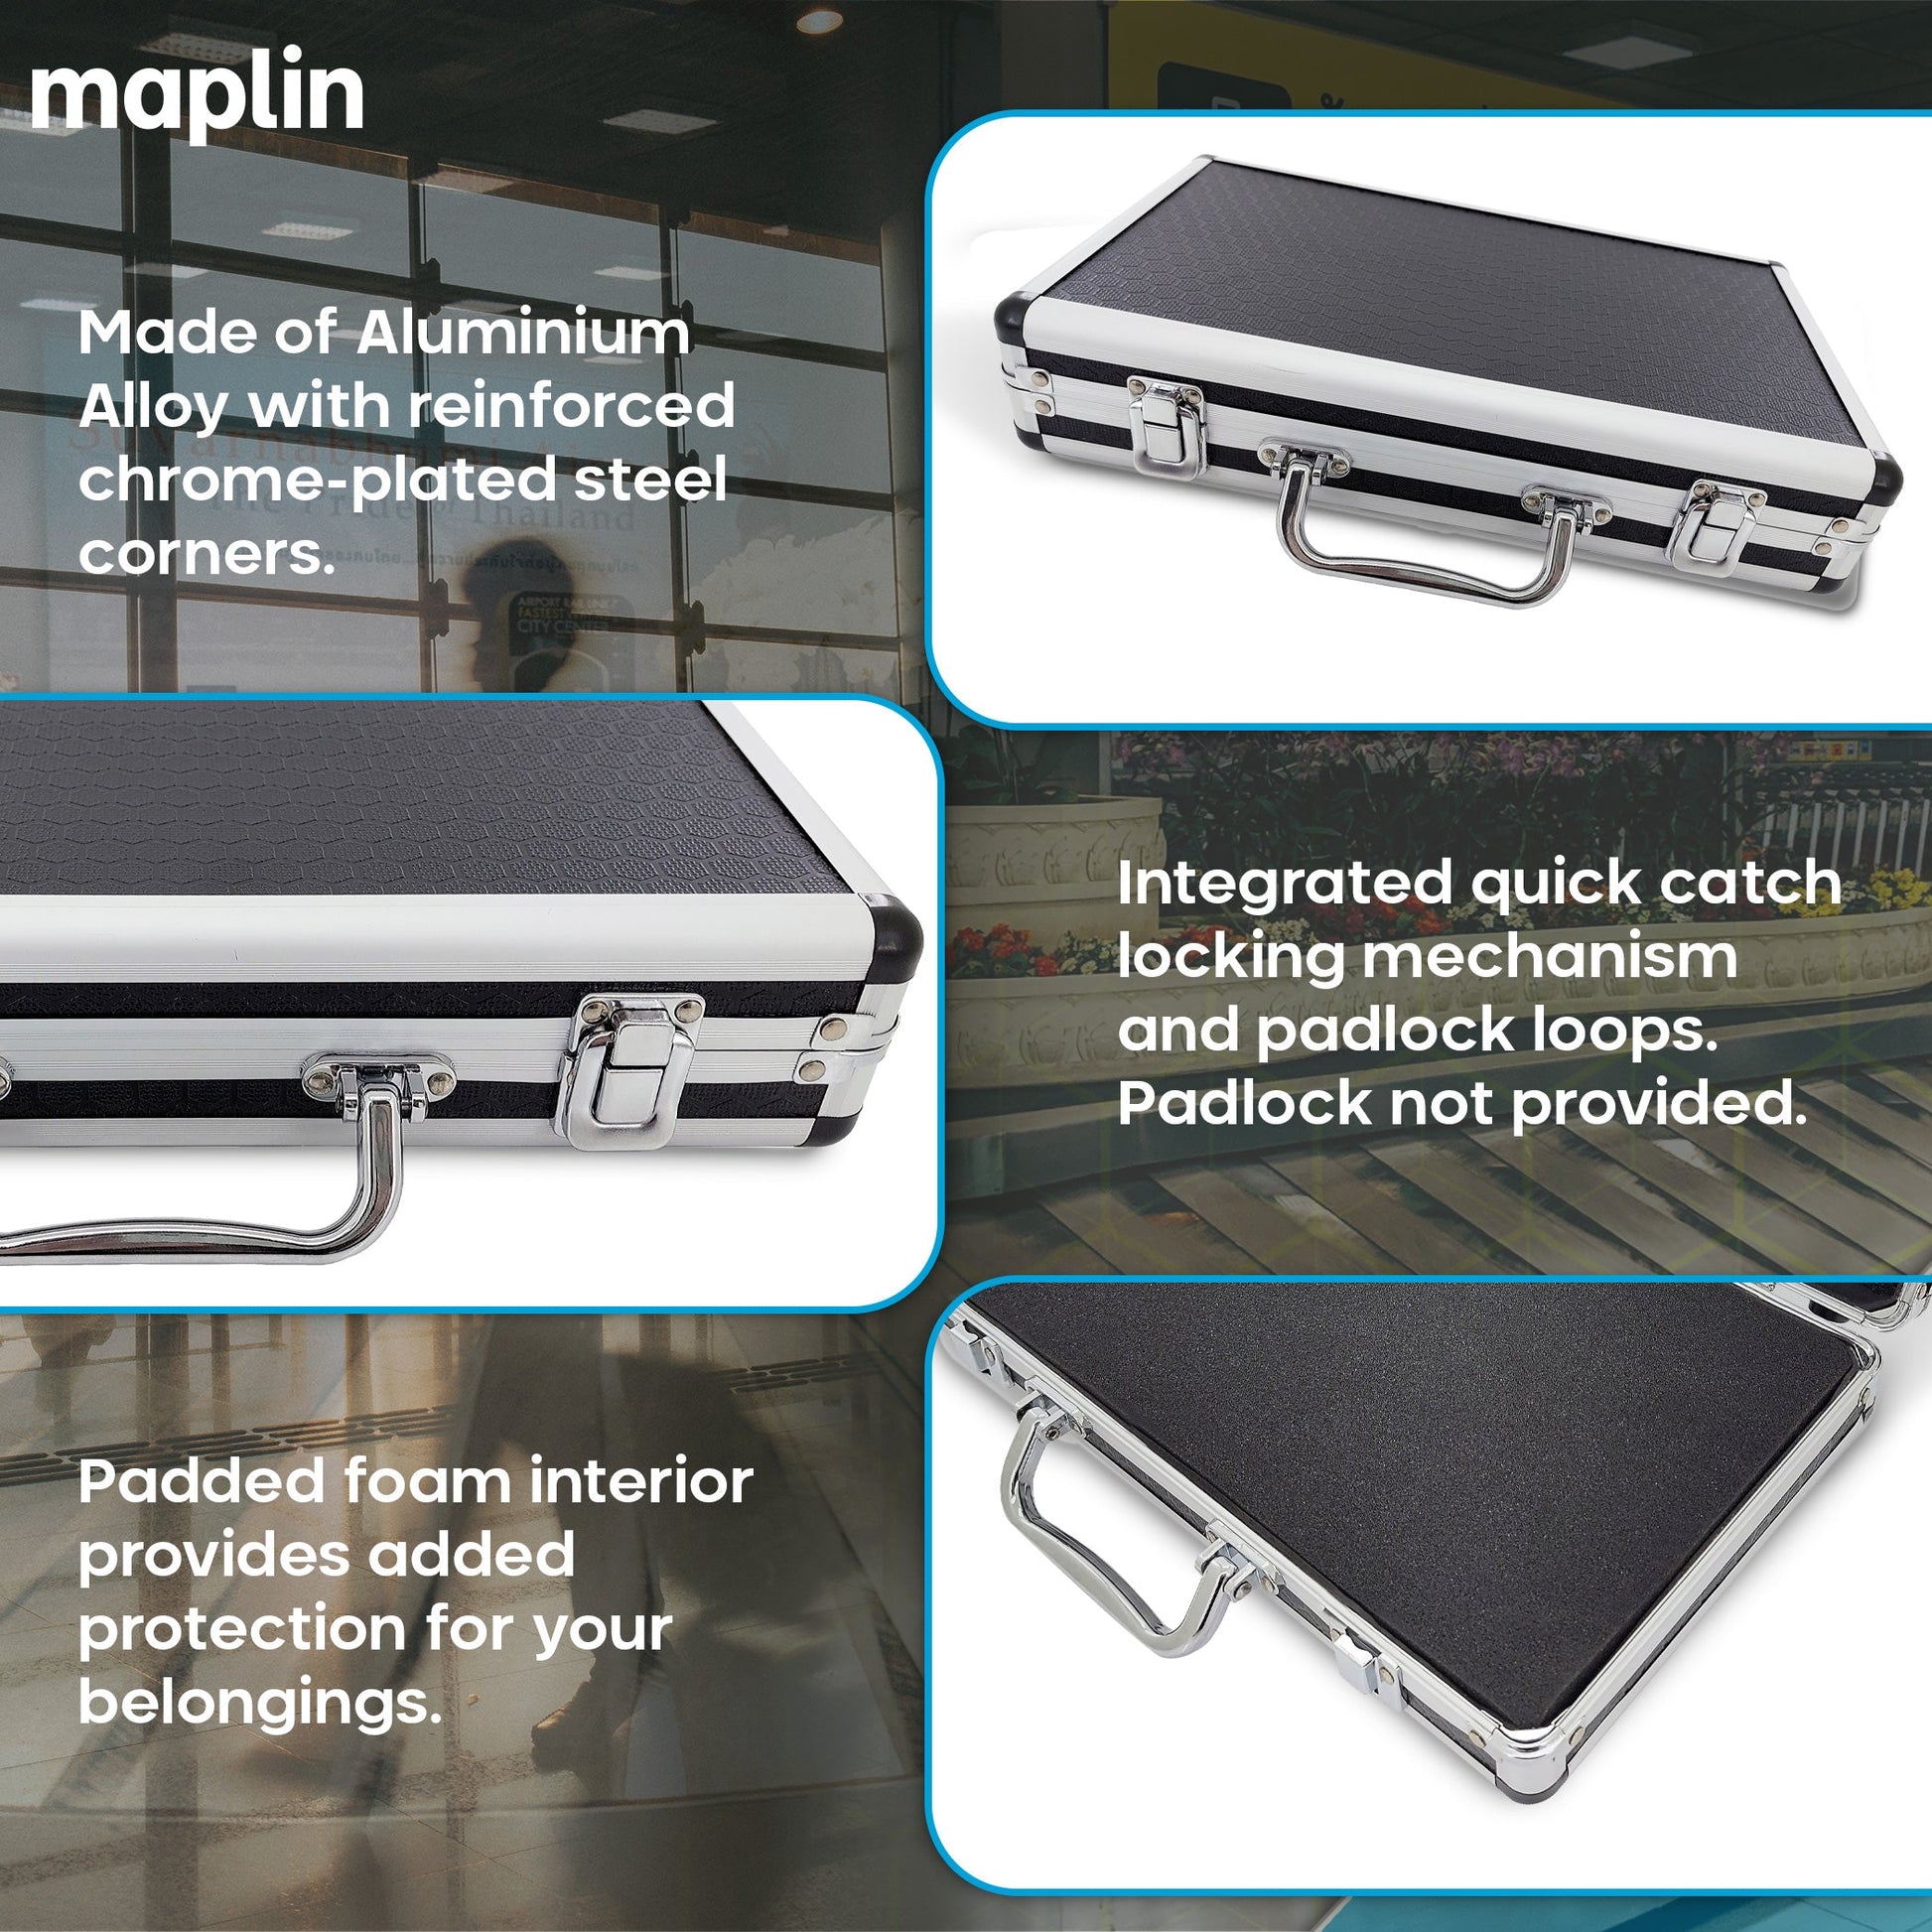 Maplin Plus Aluminium 65 x 345 x 205mm Travel Flight Case - Black - maplin.co.uk